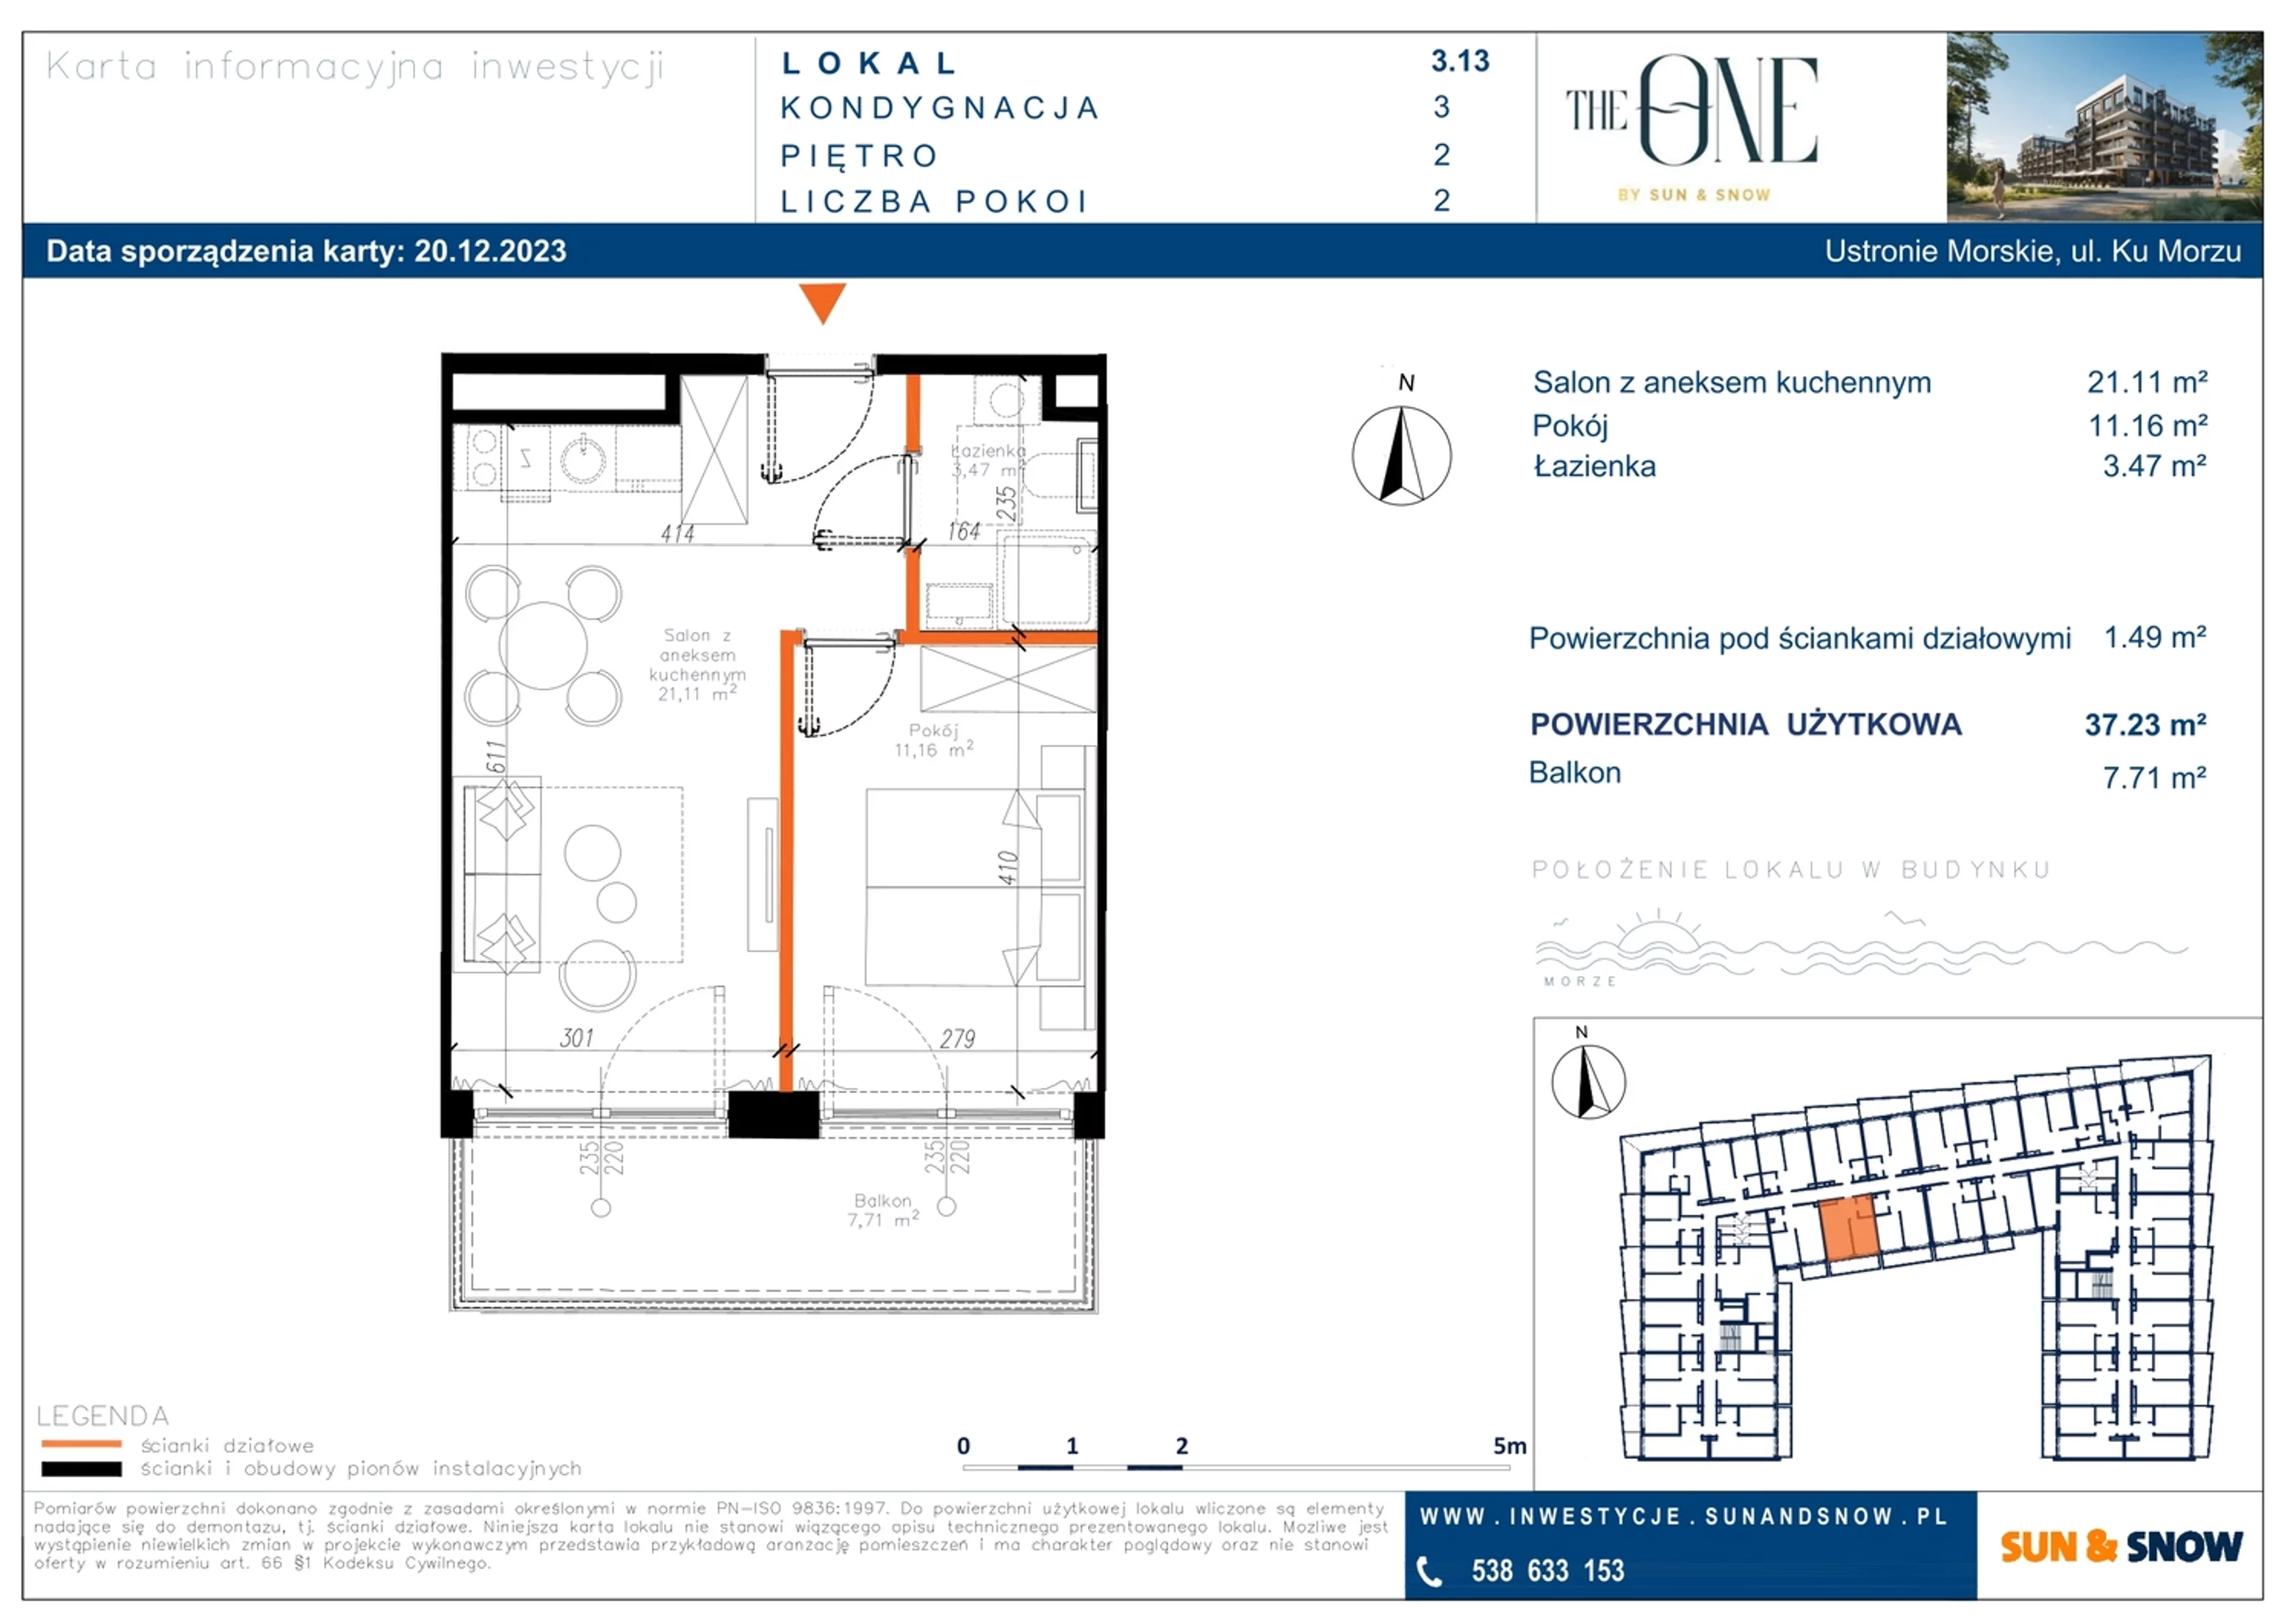 Apartament 37,23 m², piętro 2, oferta nr M/3/13, The One, Ustronie Morskie, ul. Ku Morzu 4